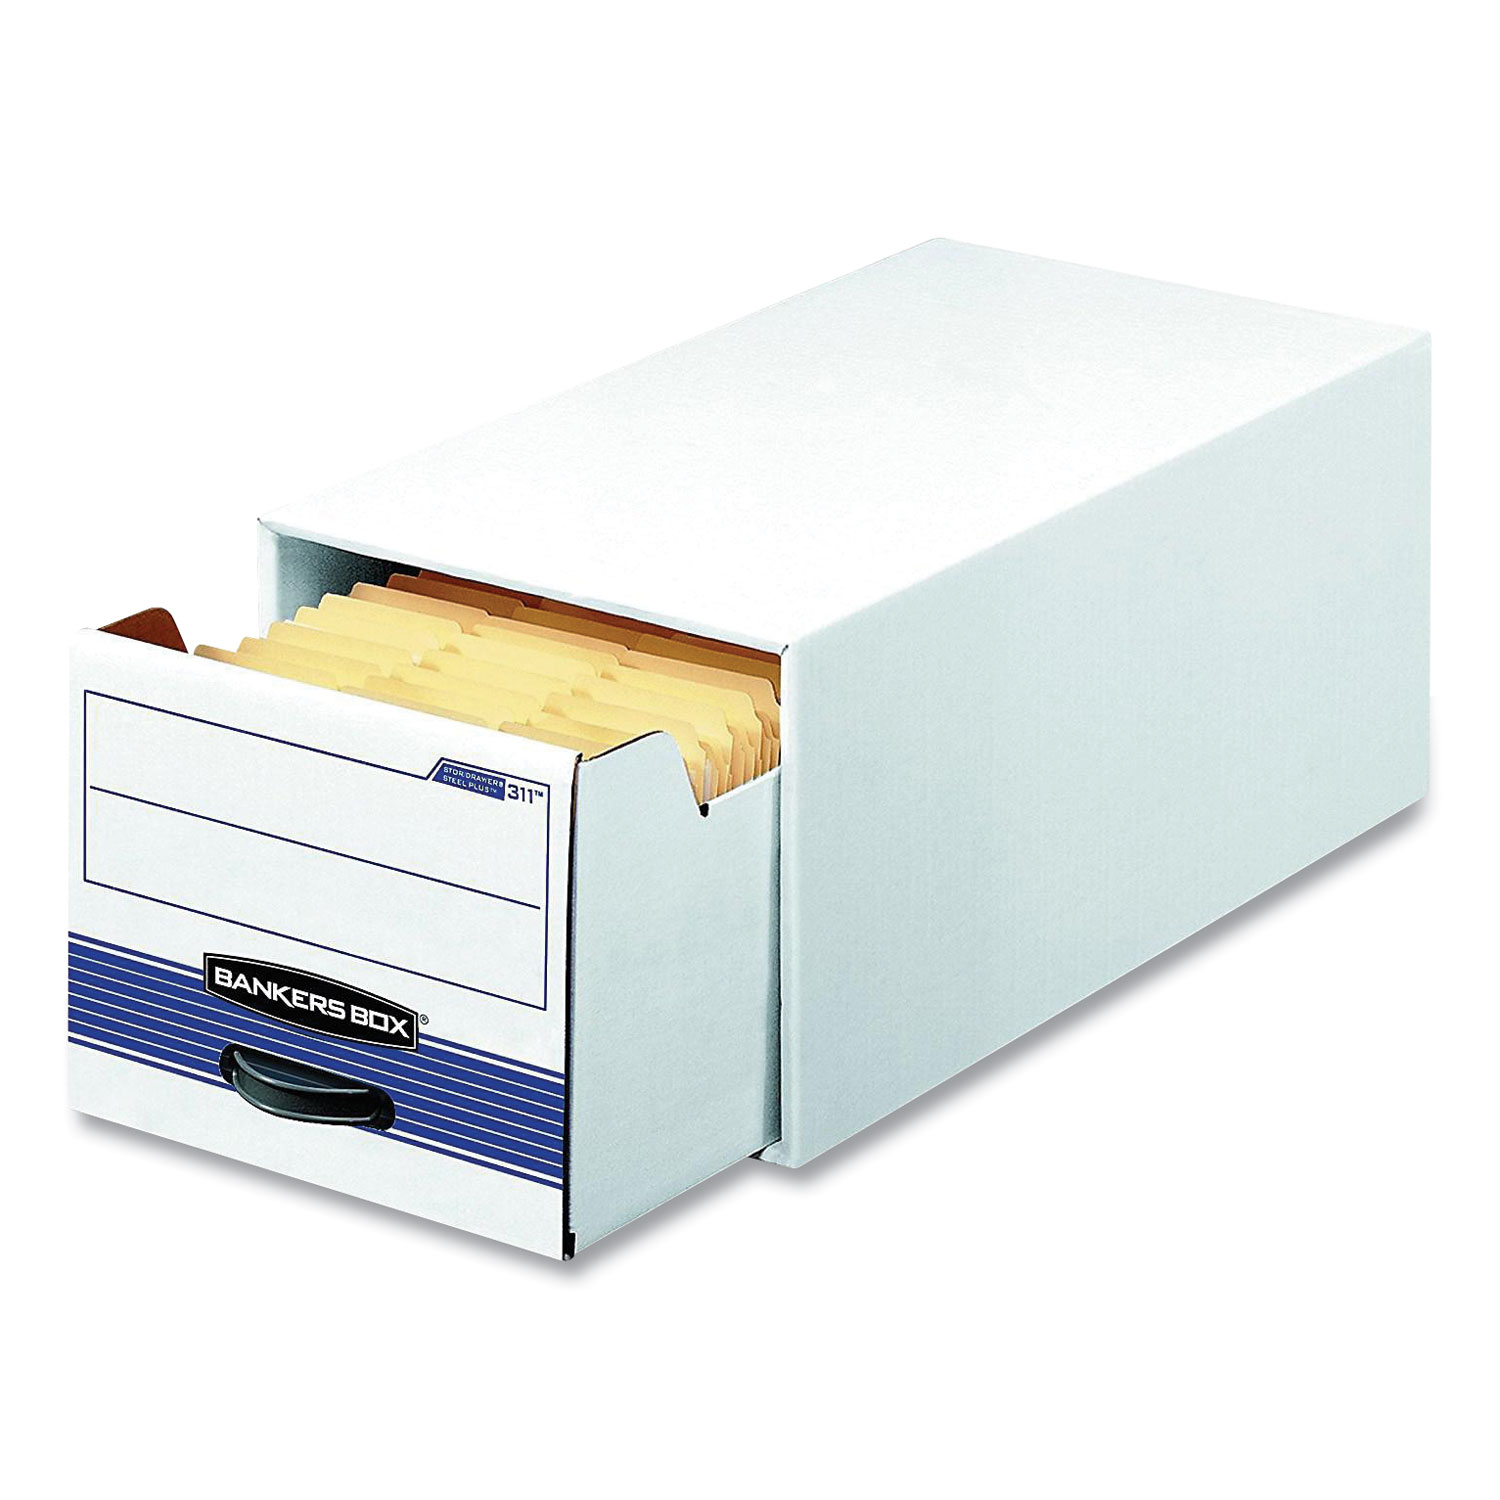  Bankers Box 00722 STOR/DRAWER Basic Space-Savings Storage Drawers, Legal Files, 16.75 x 19.5 x 11.5, White/Blue (FEL392764) 